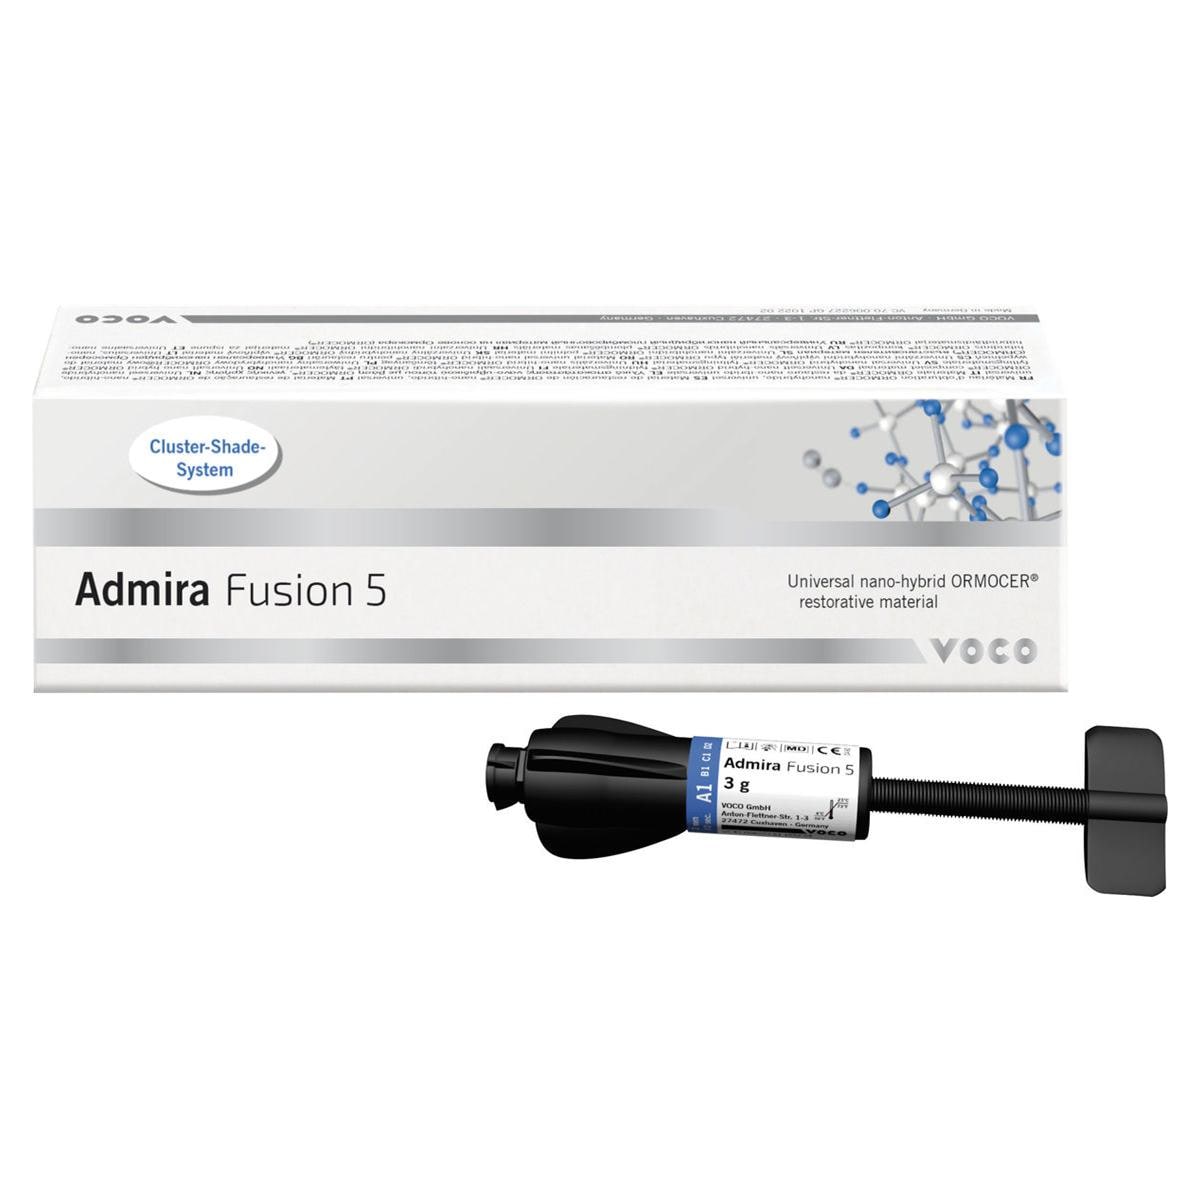 Admira Fusion 5 navulling spuit - A3.5, 3 g